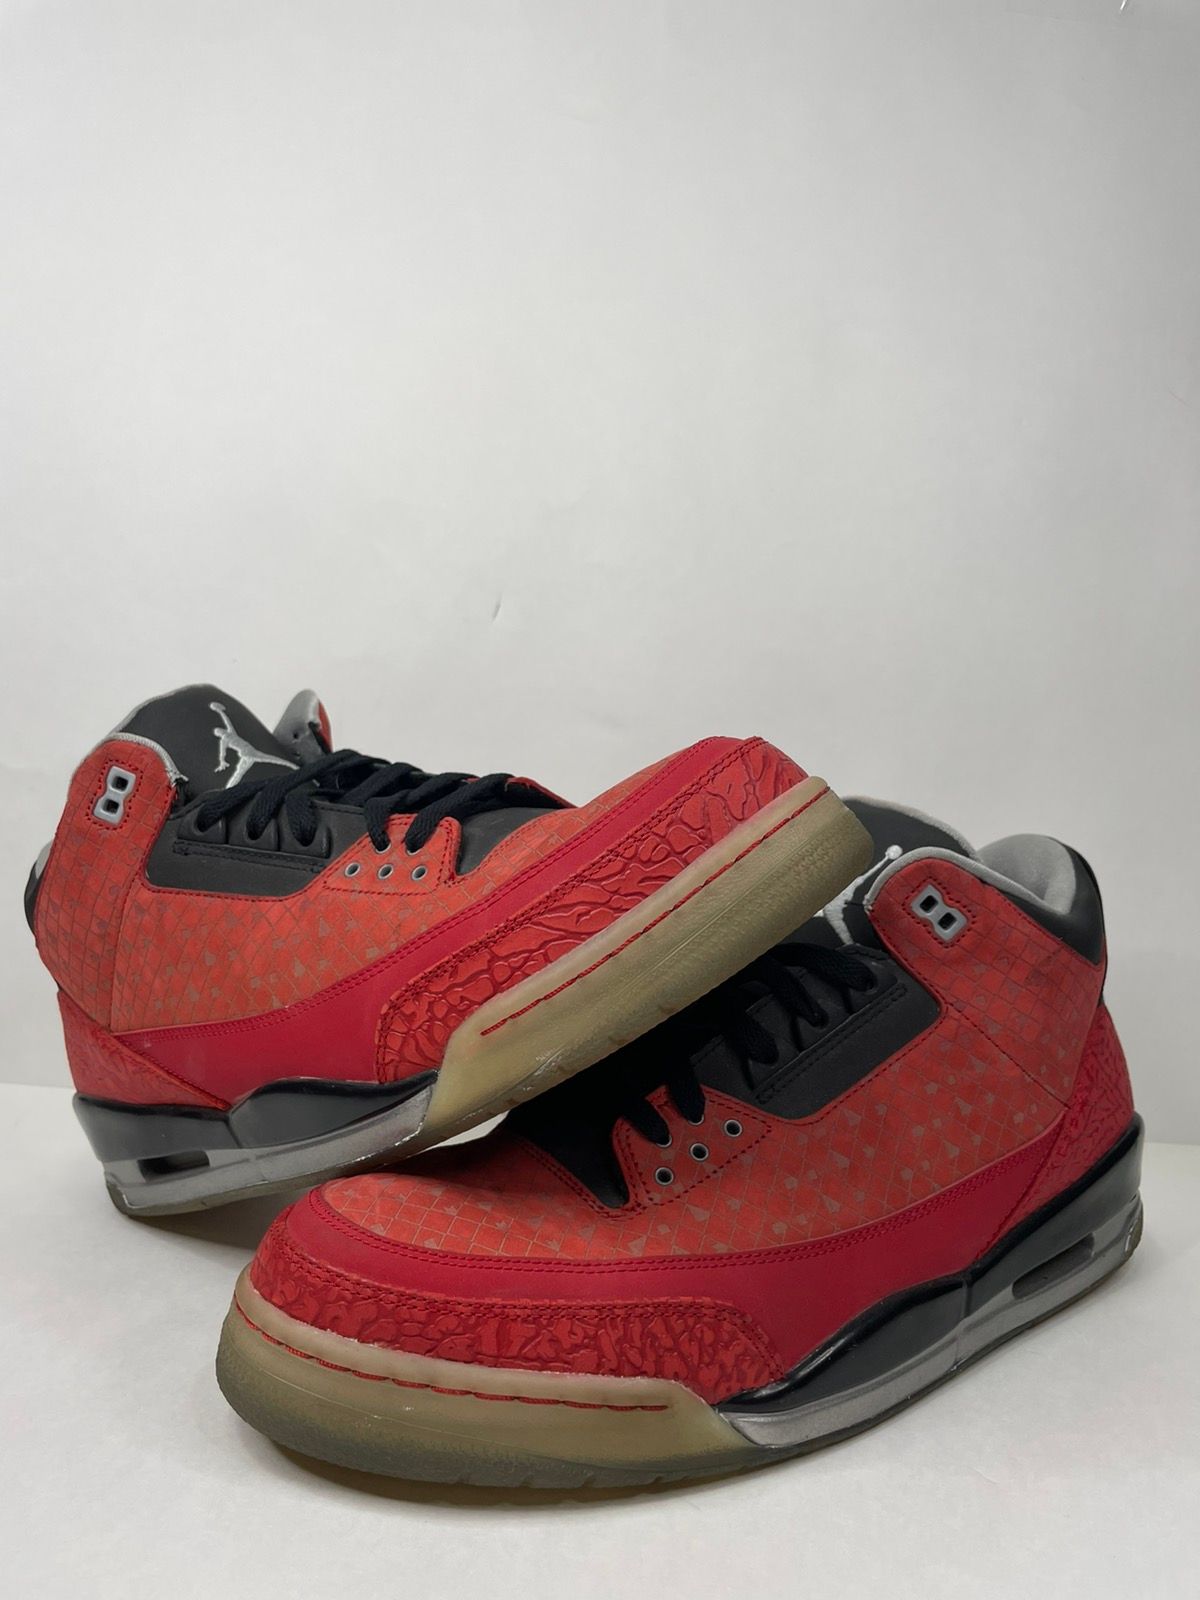 Pre-owned Jordan Brand Air Jordan 3 Retro 2013 Doernbecher 2010 Shoes In Red